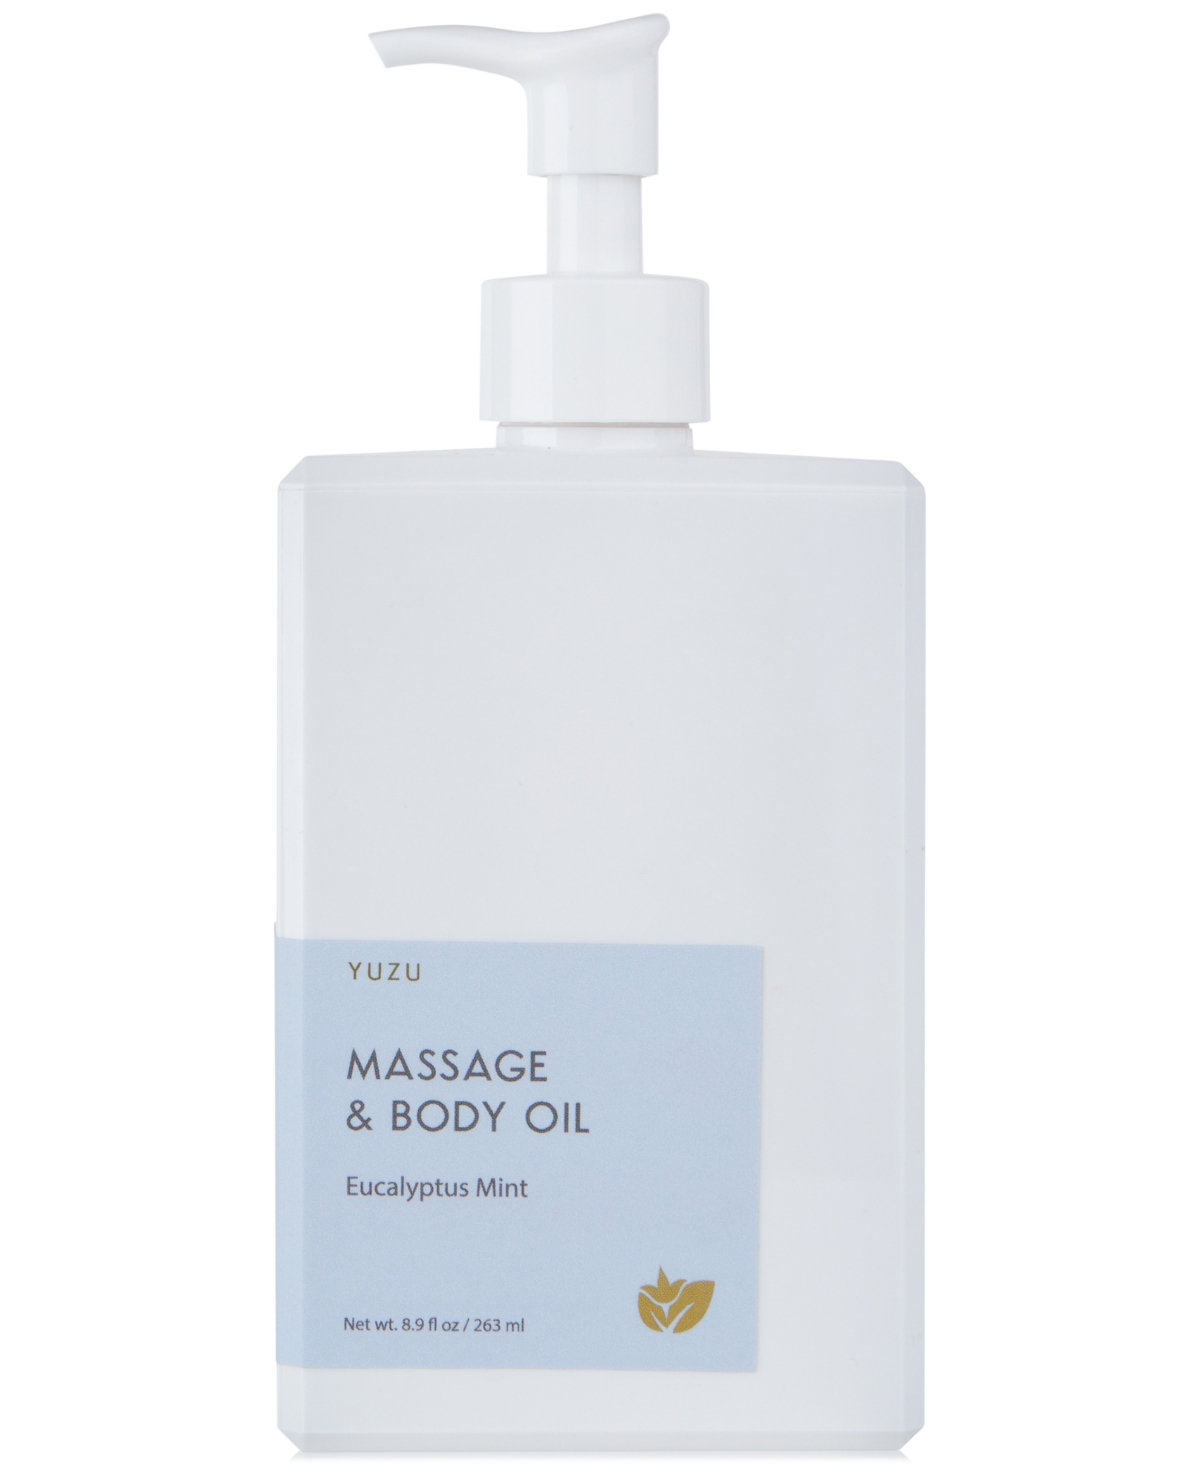 Eucalyptus Mint Massage & Body Oil, 8.9 oz.